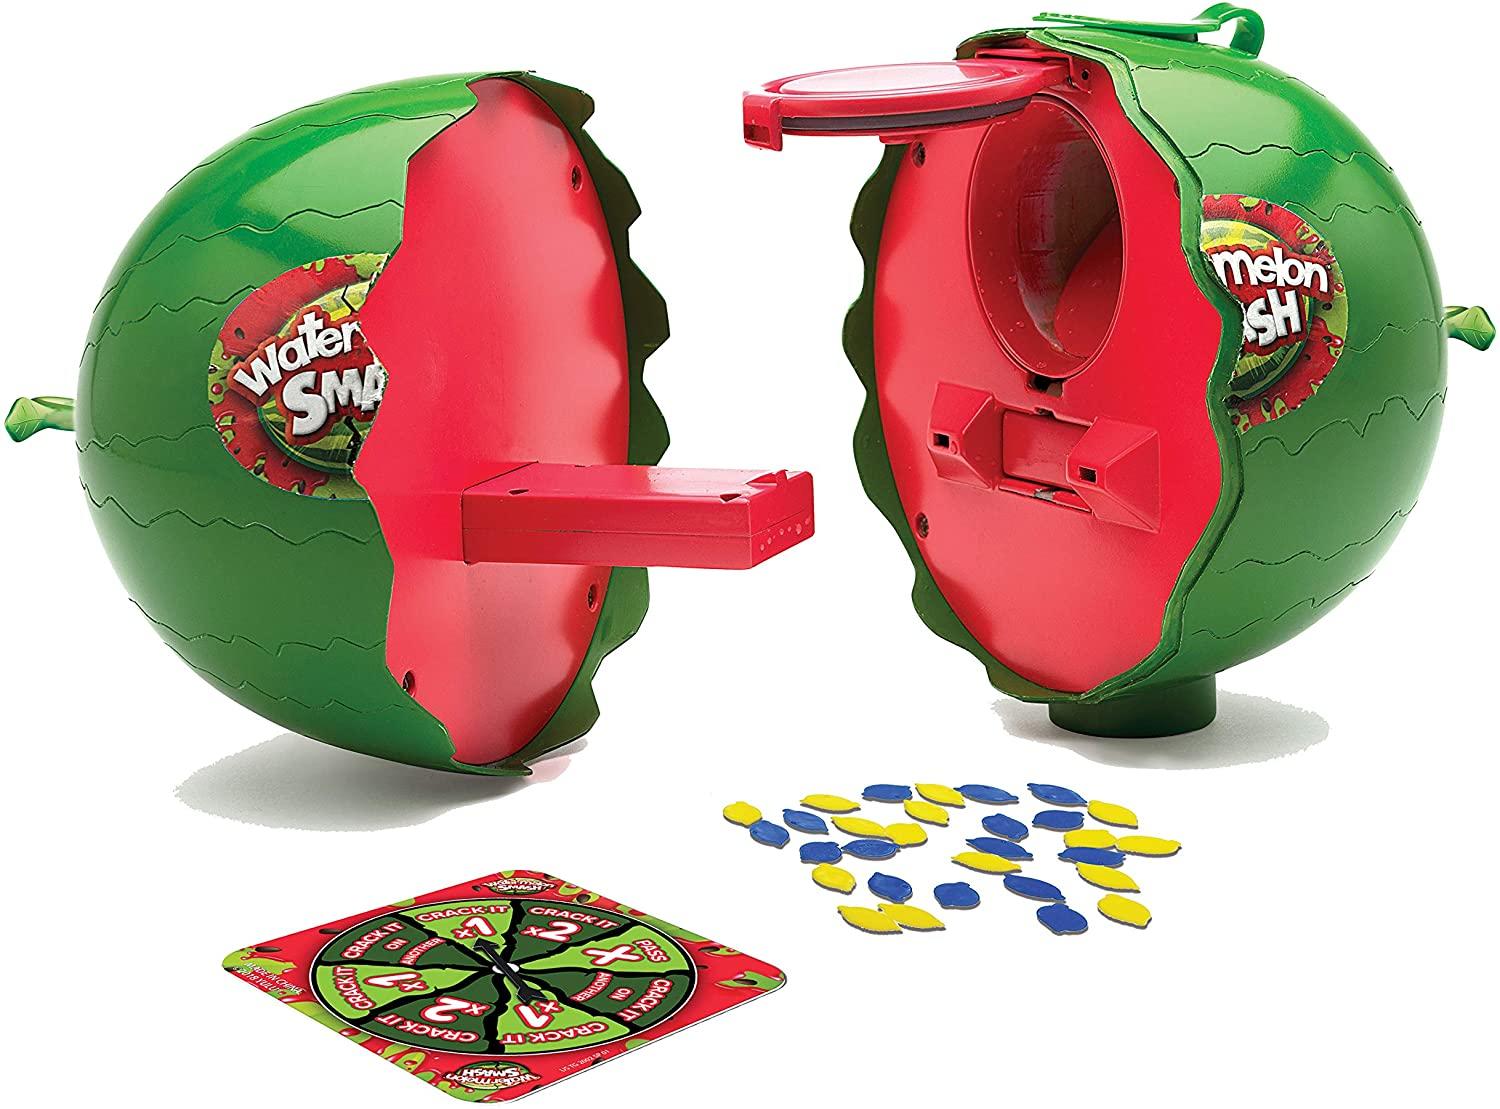 Yulu Watermelon Smash Toymaster Ballina